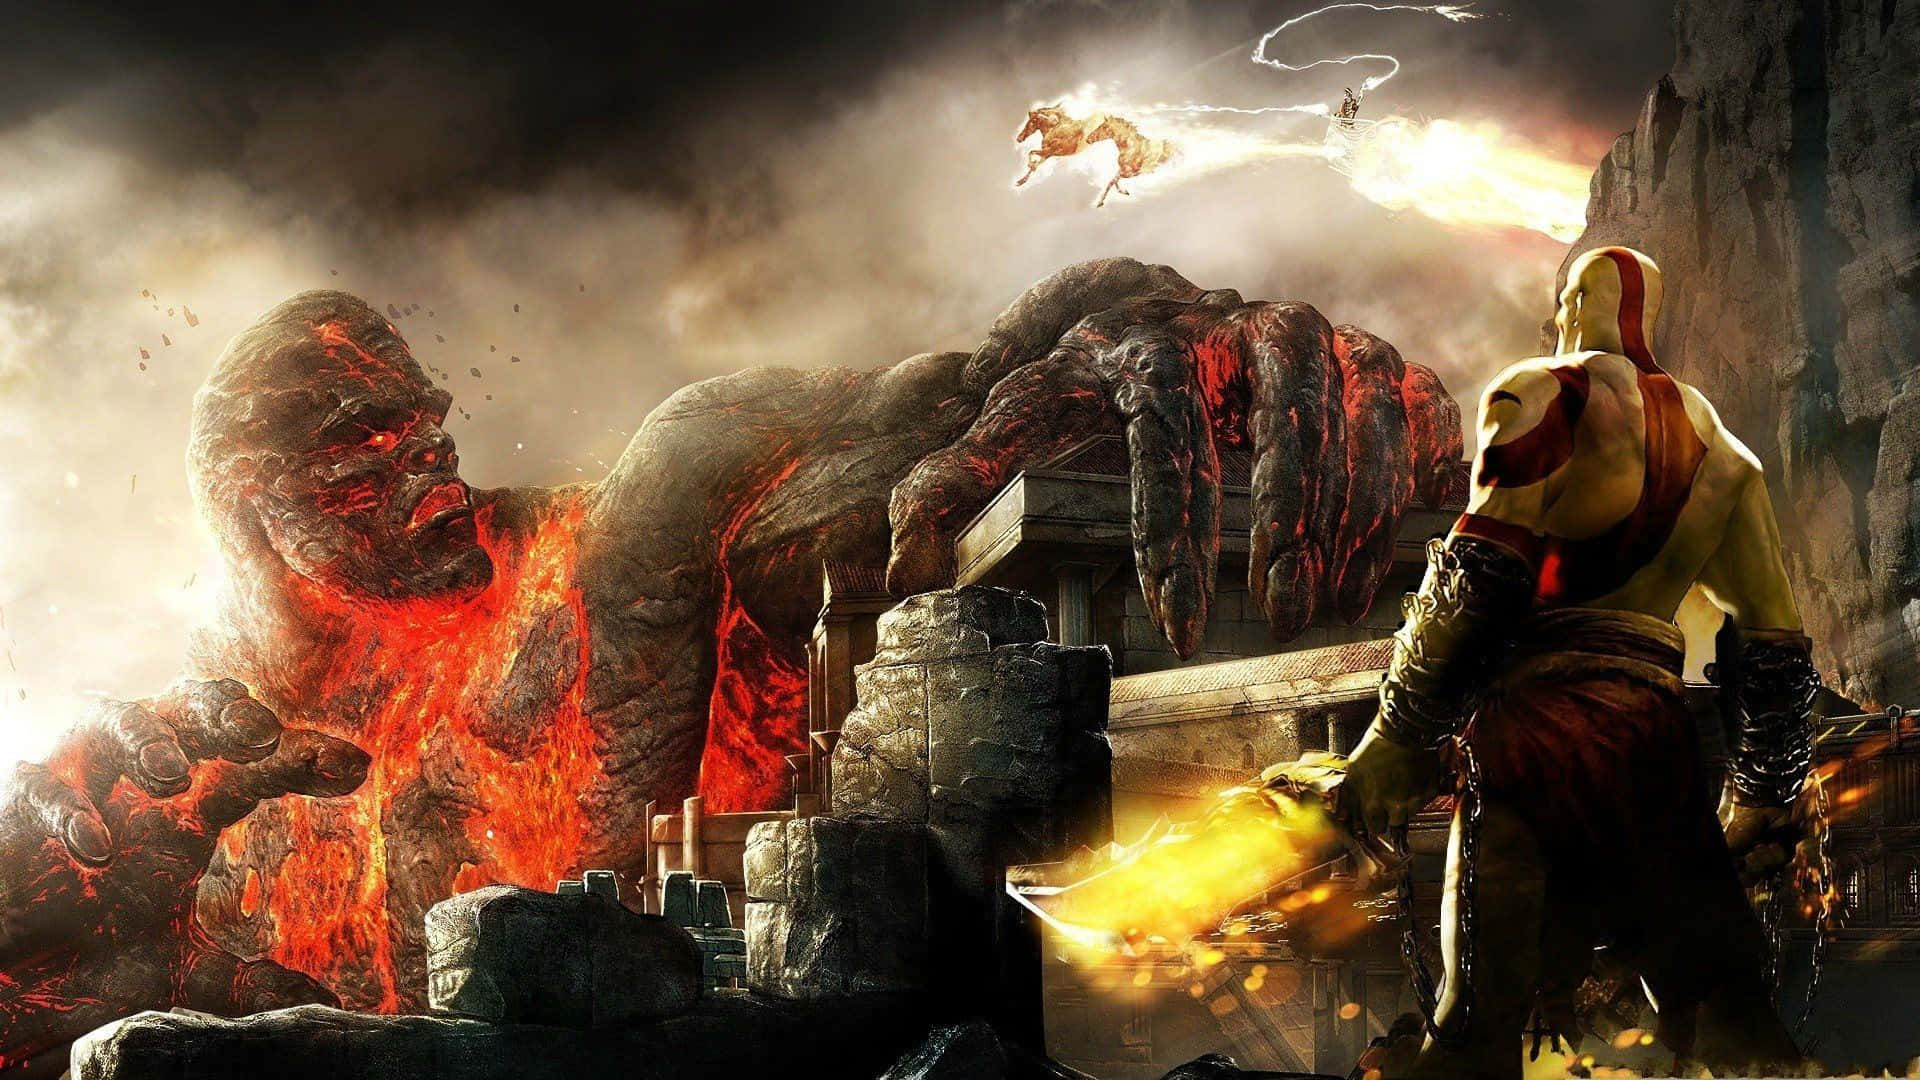 Free God Of War 3 Wallpaper Downloads, [100+] God Of War 3 Wallpapers for  FREE 